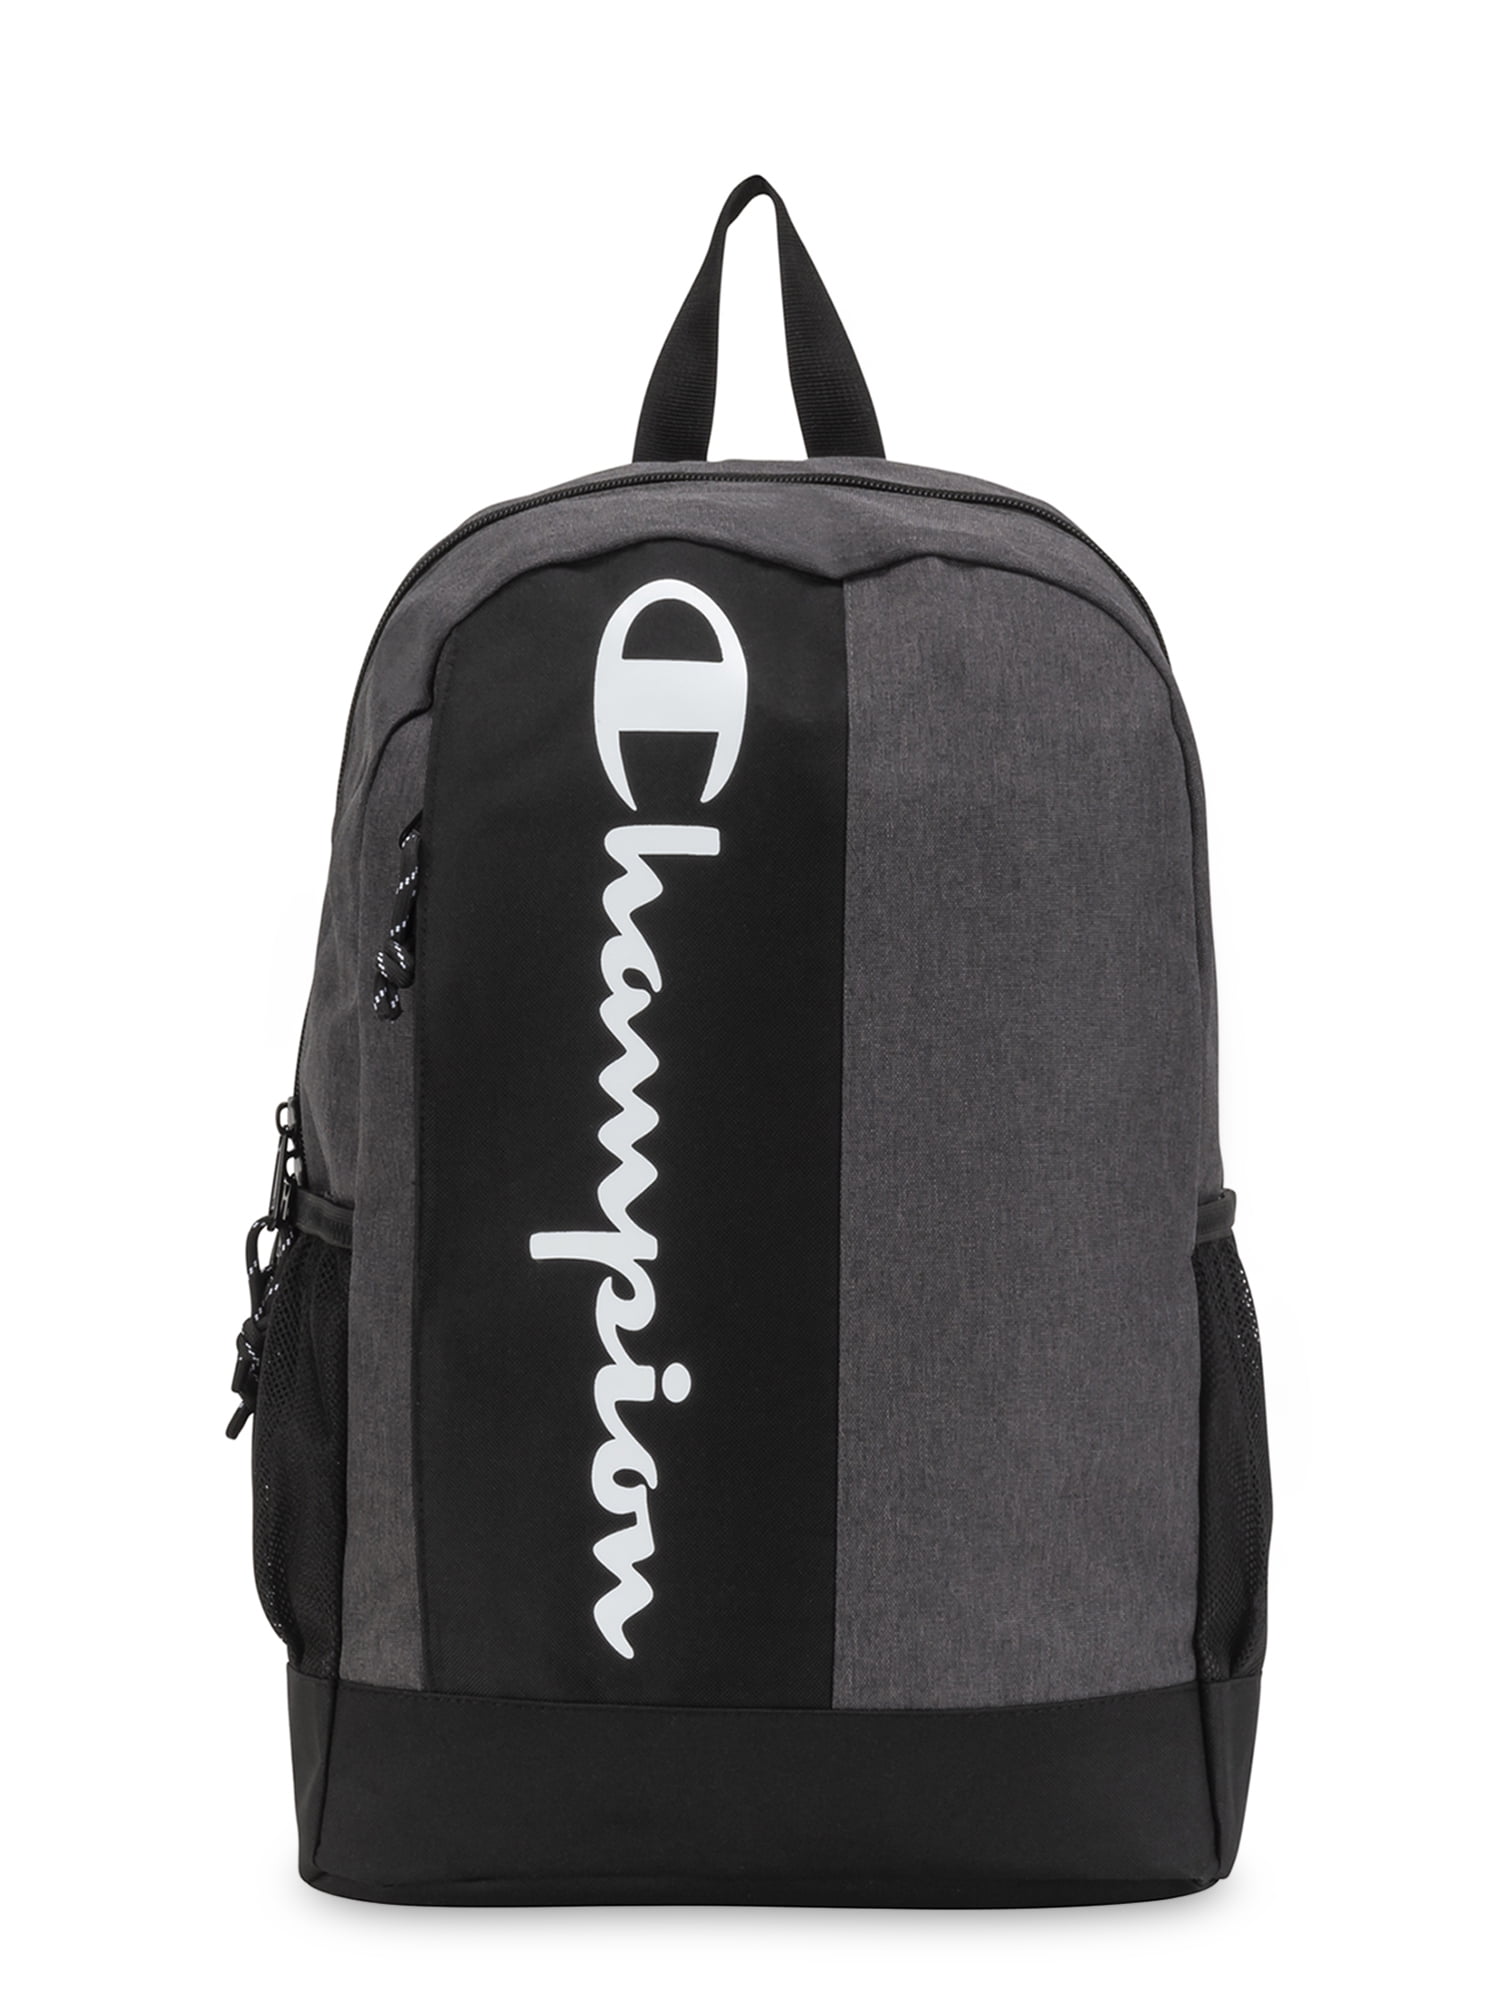 champion men's champion advocate backpack accessory